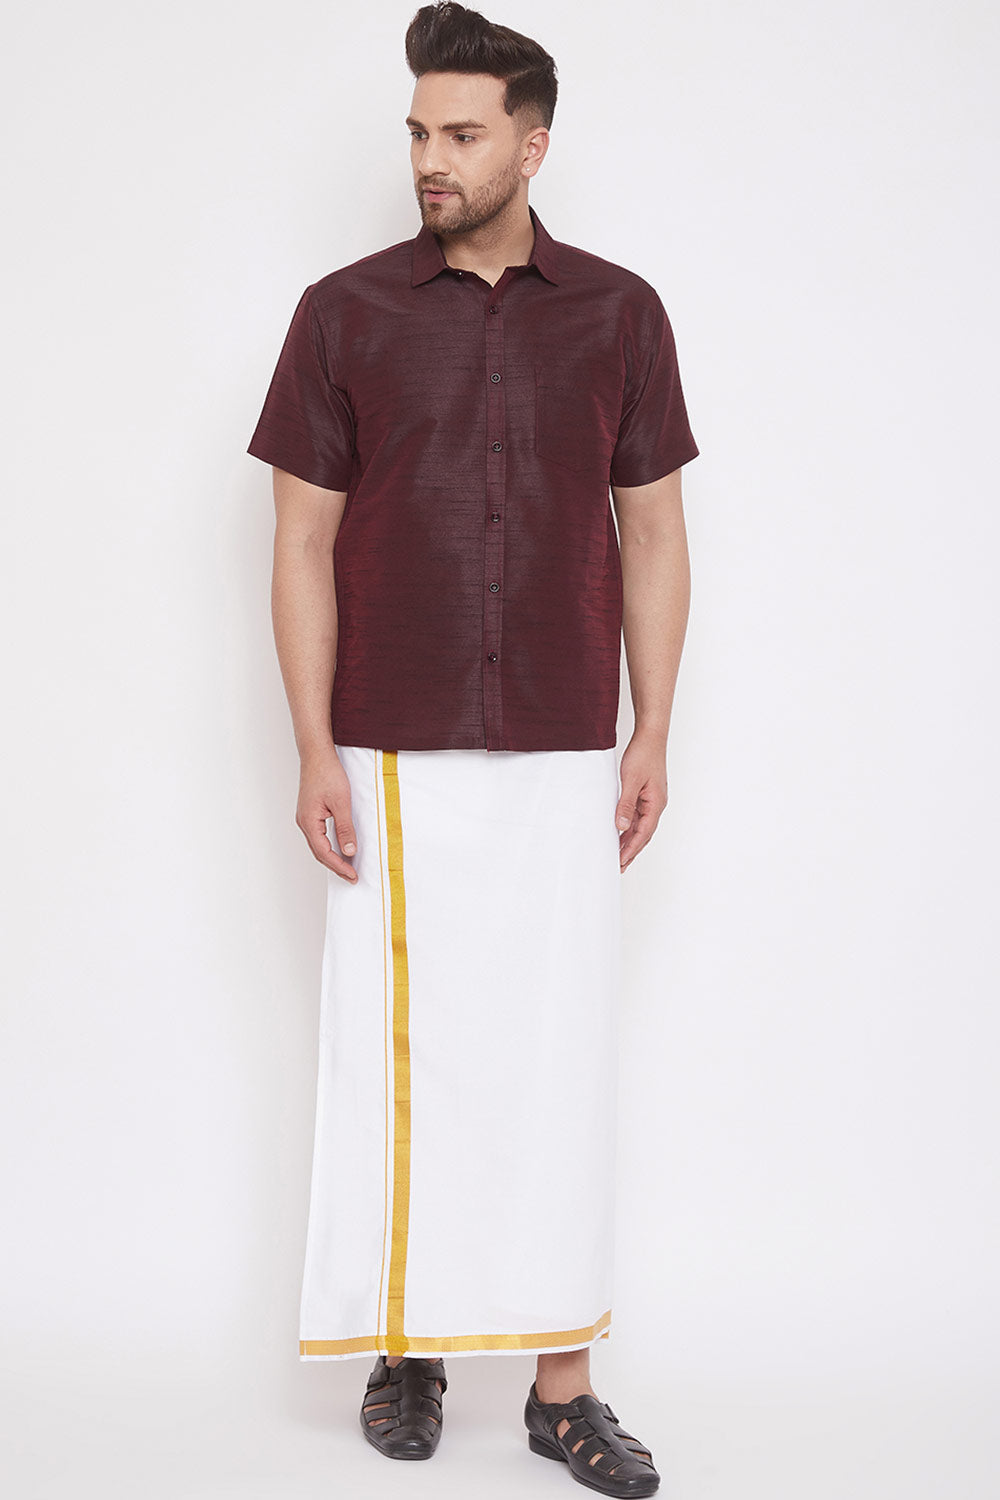 Maroon Art Silk Shirt and Mundu for Men's